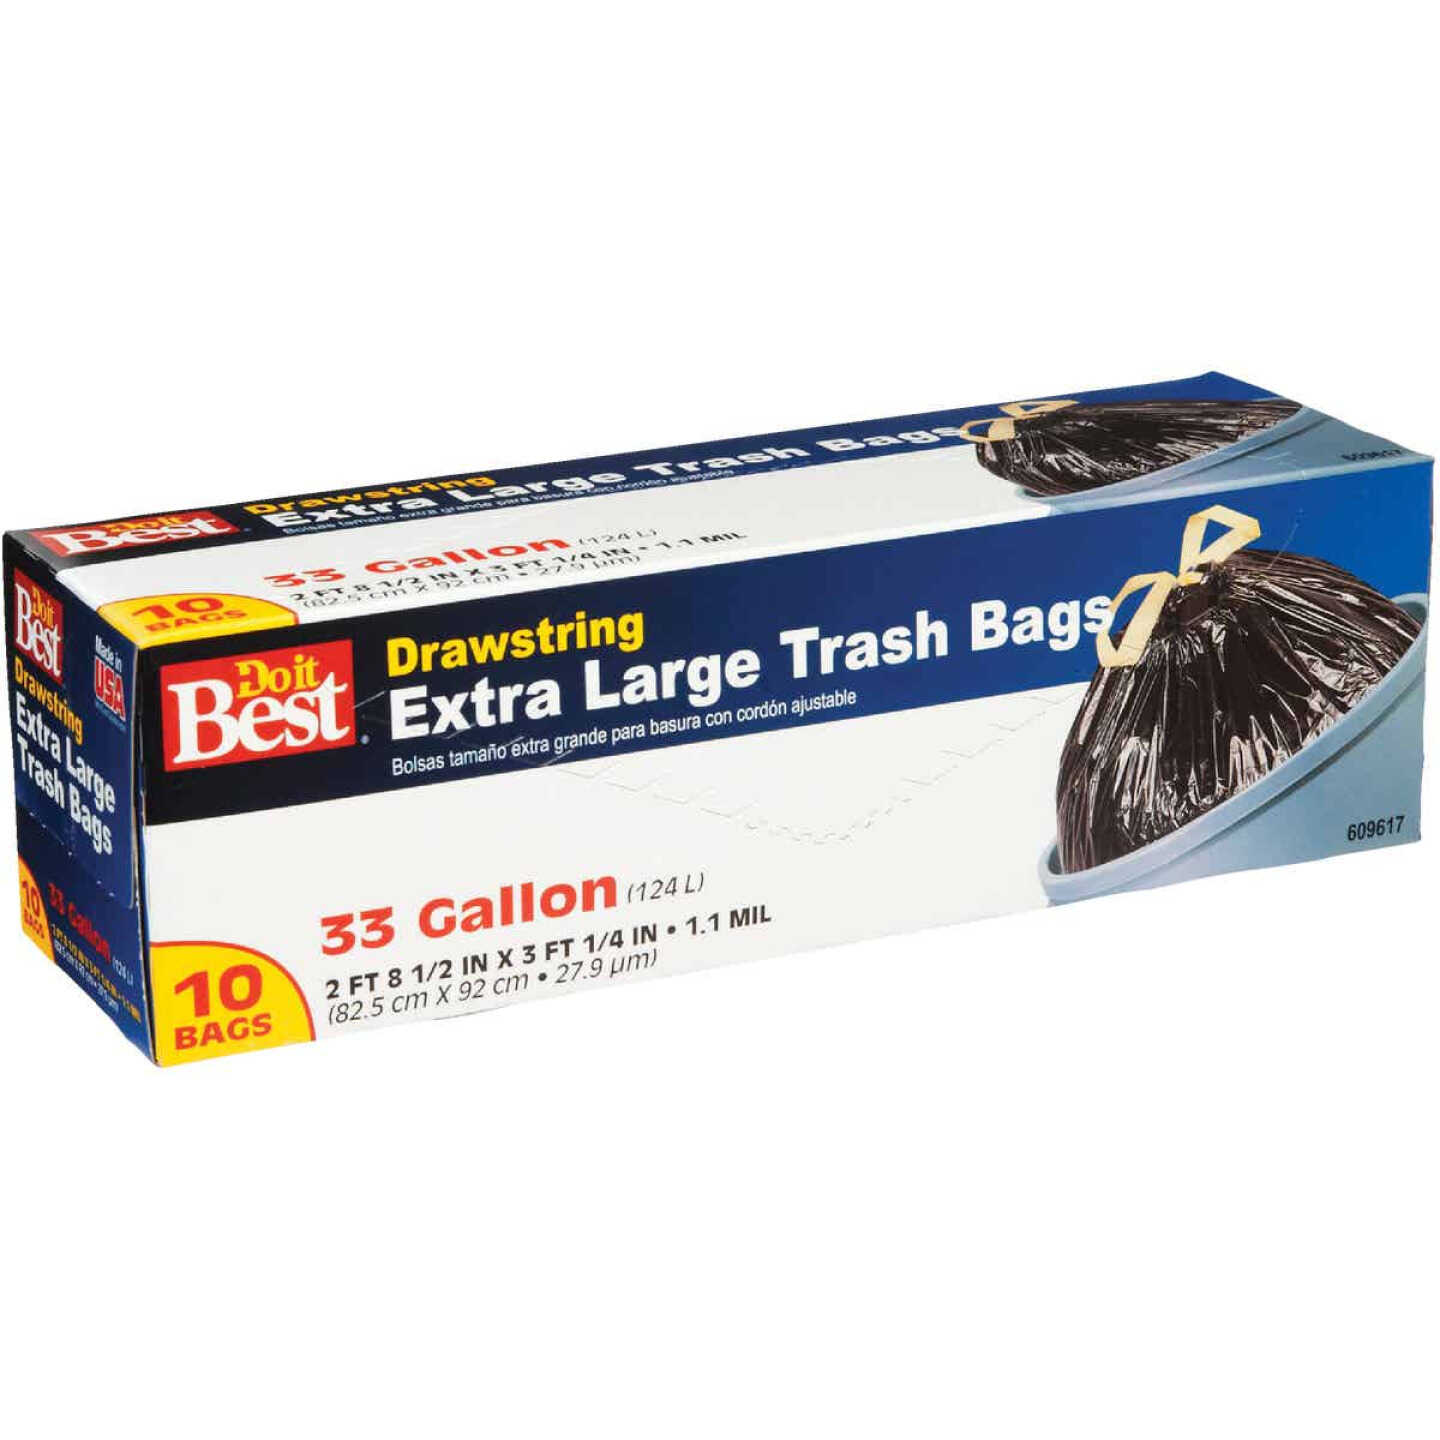 Trash Bags - 33 gallon - 50 count